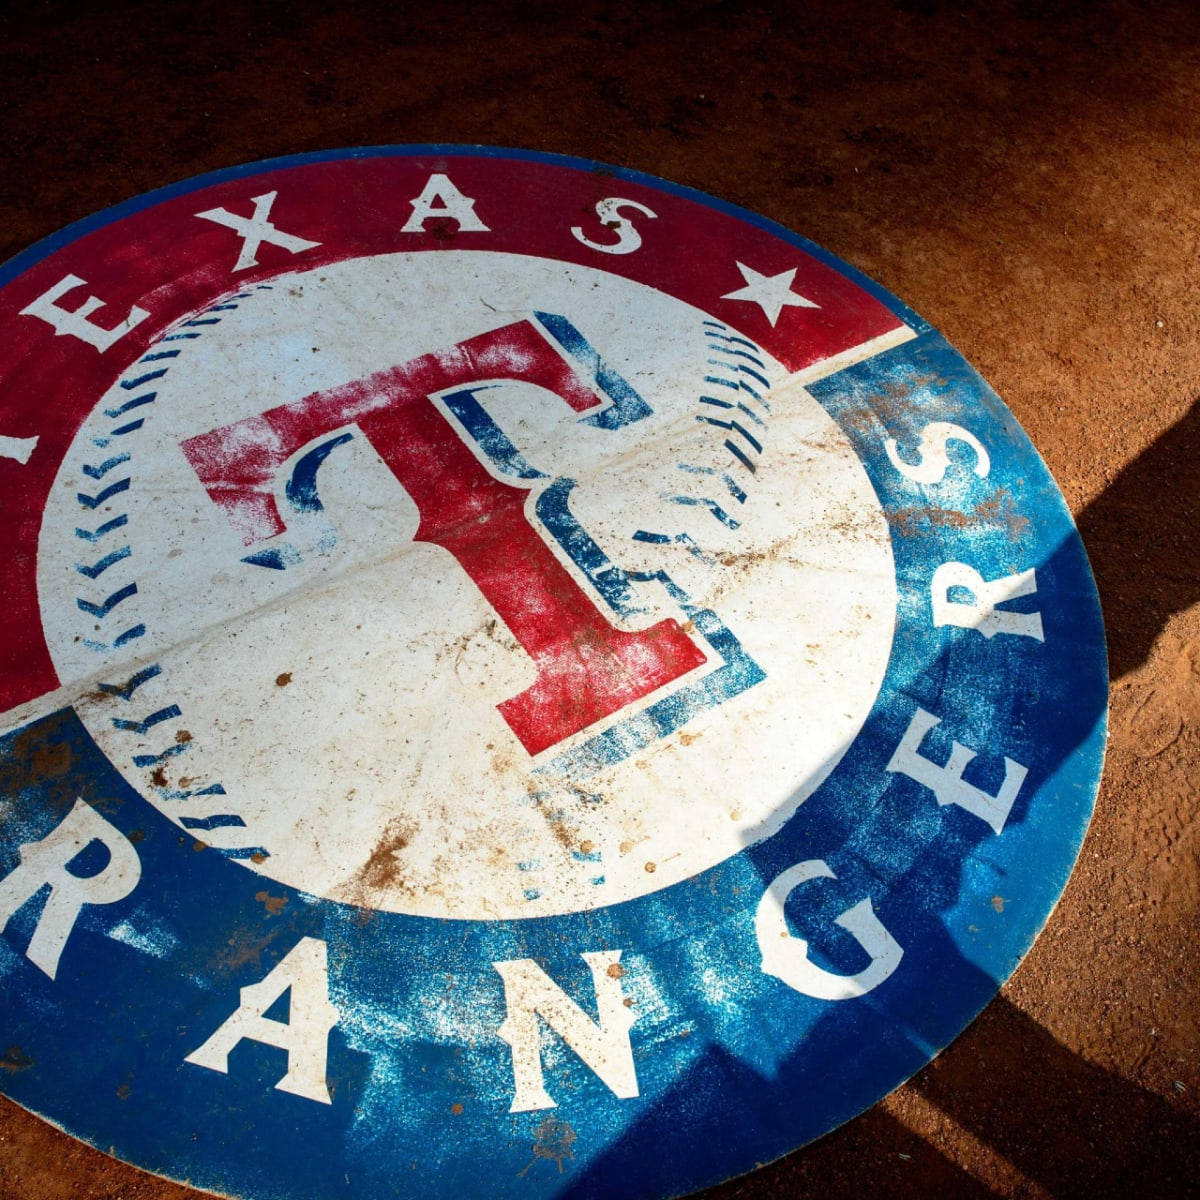 Texas Rangers Logo On The Floor Wallpaper